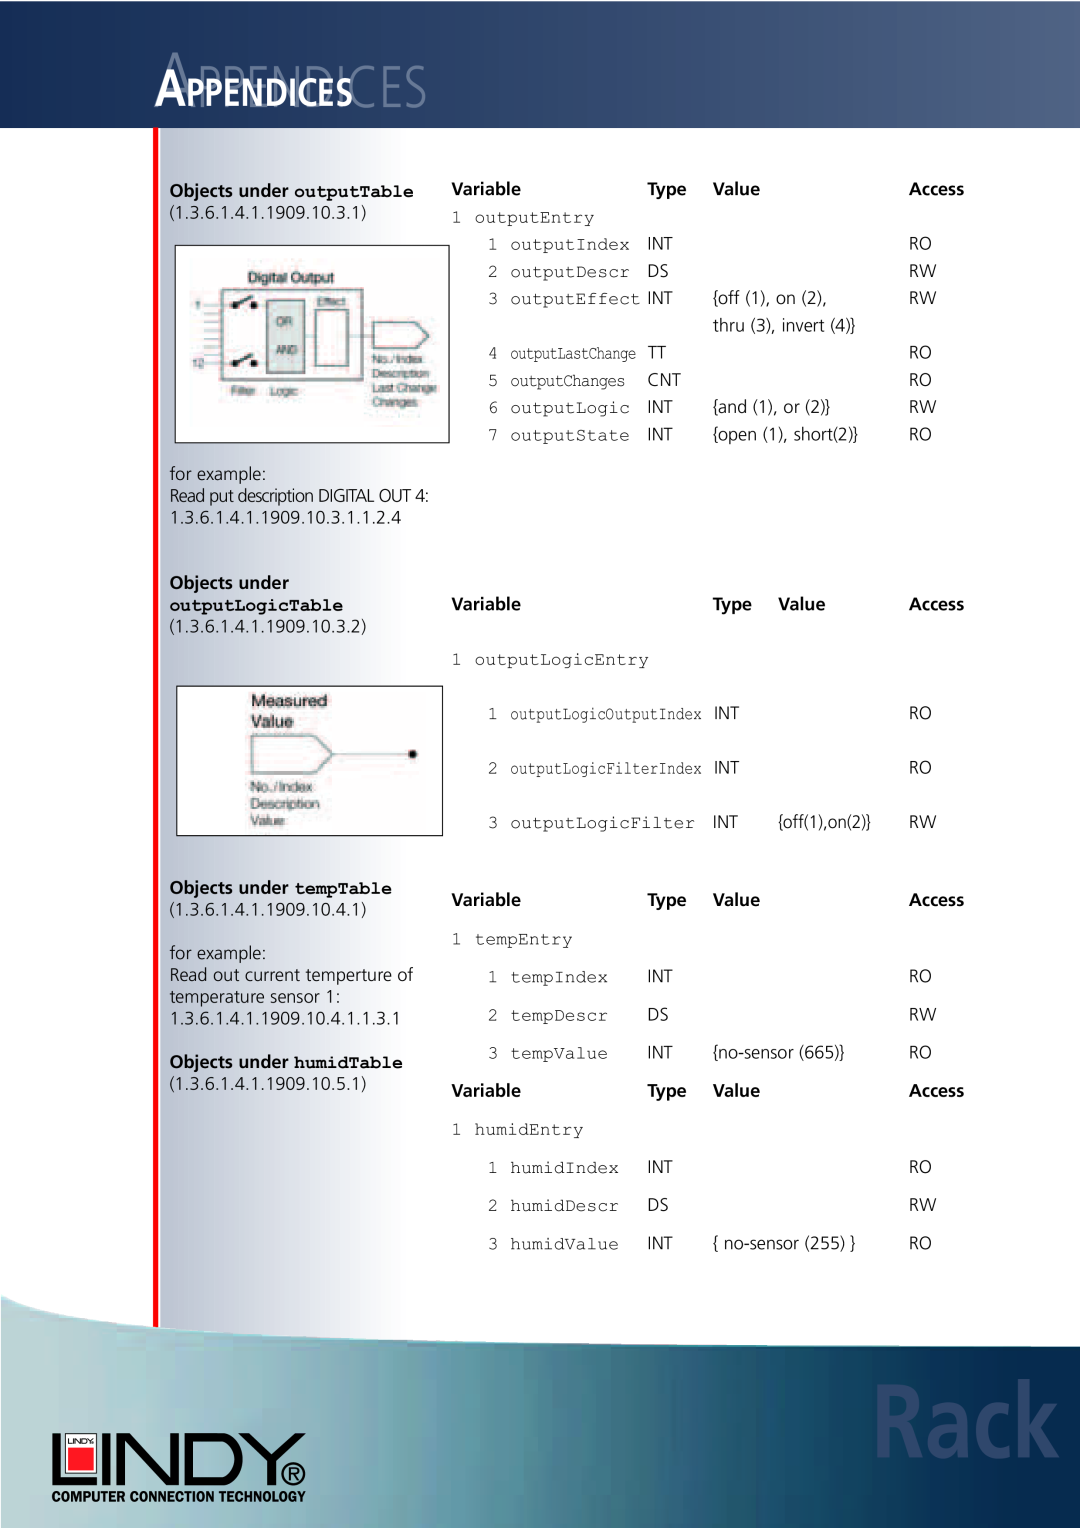 Lindy Carbon Monoxide Alarm user manual Rack, Aappendicesppendices, Objects under outputTable, outputLogicTable 